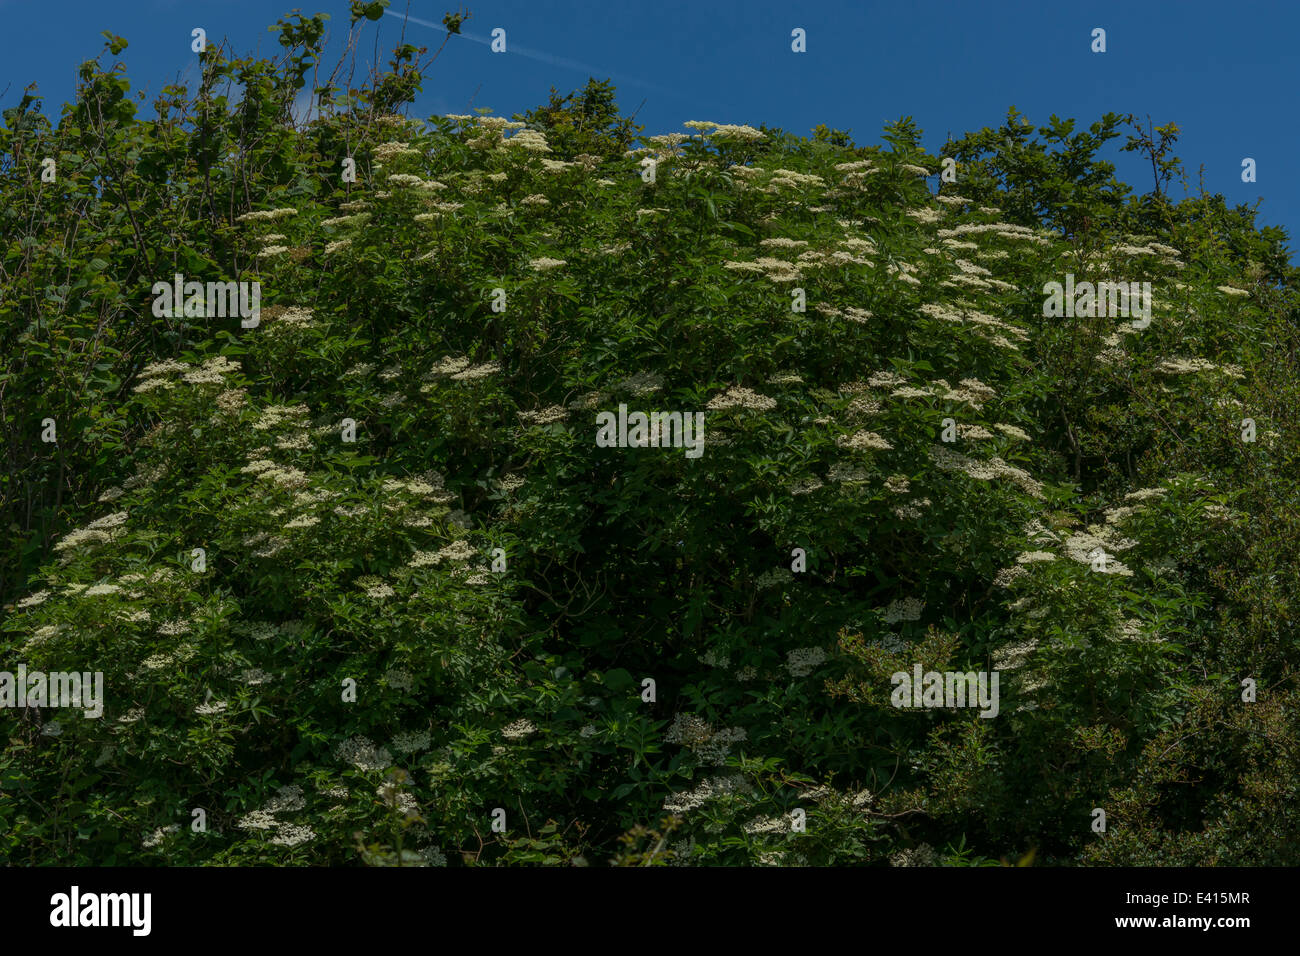 Common Elder / Sambucus nigra shrub in early summer bloom. UK countryside blossom. Stock Photo